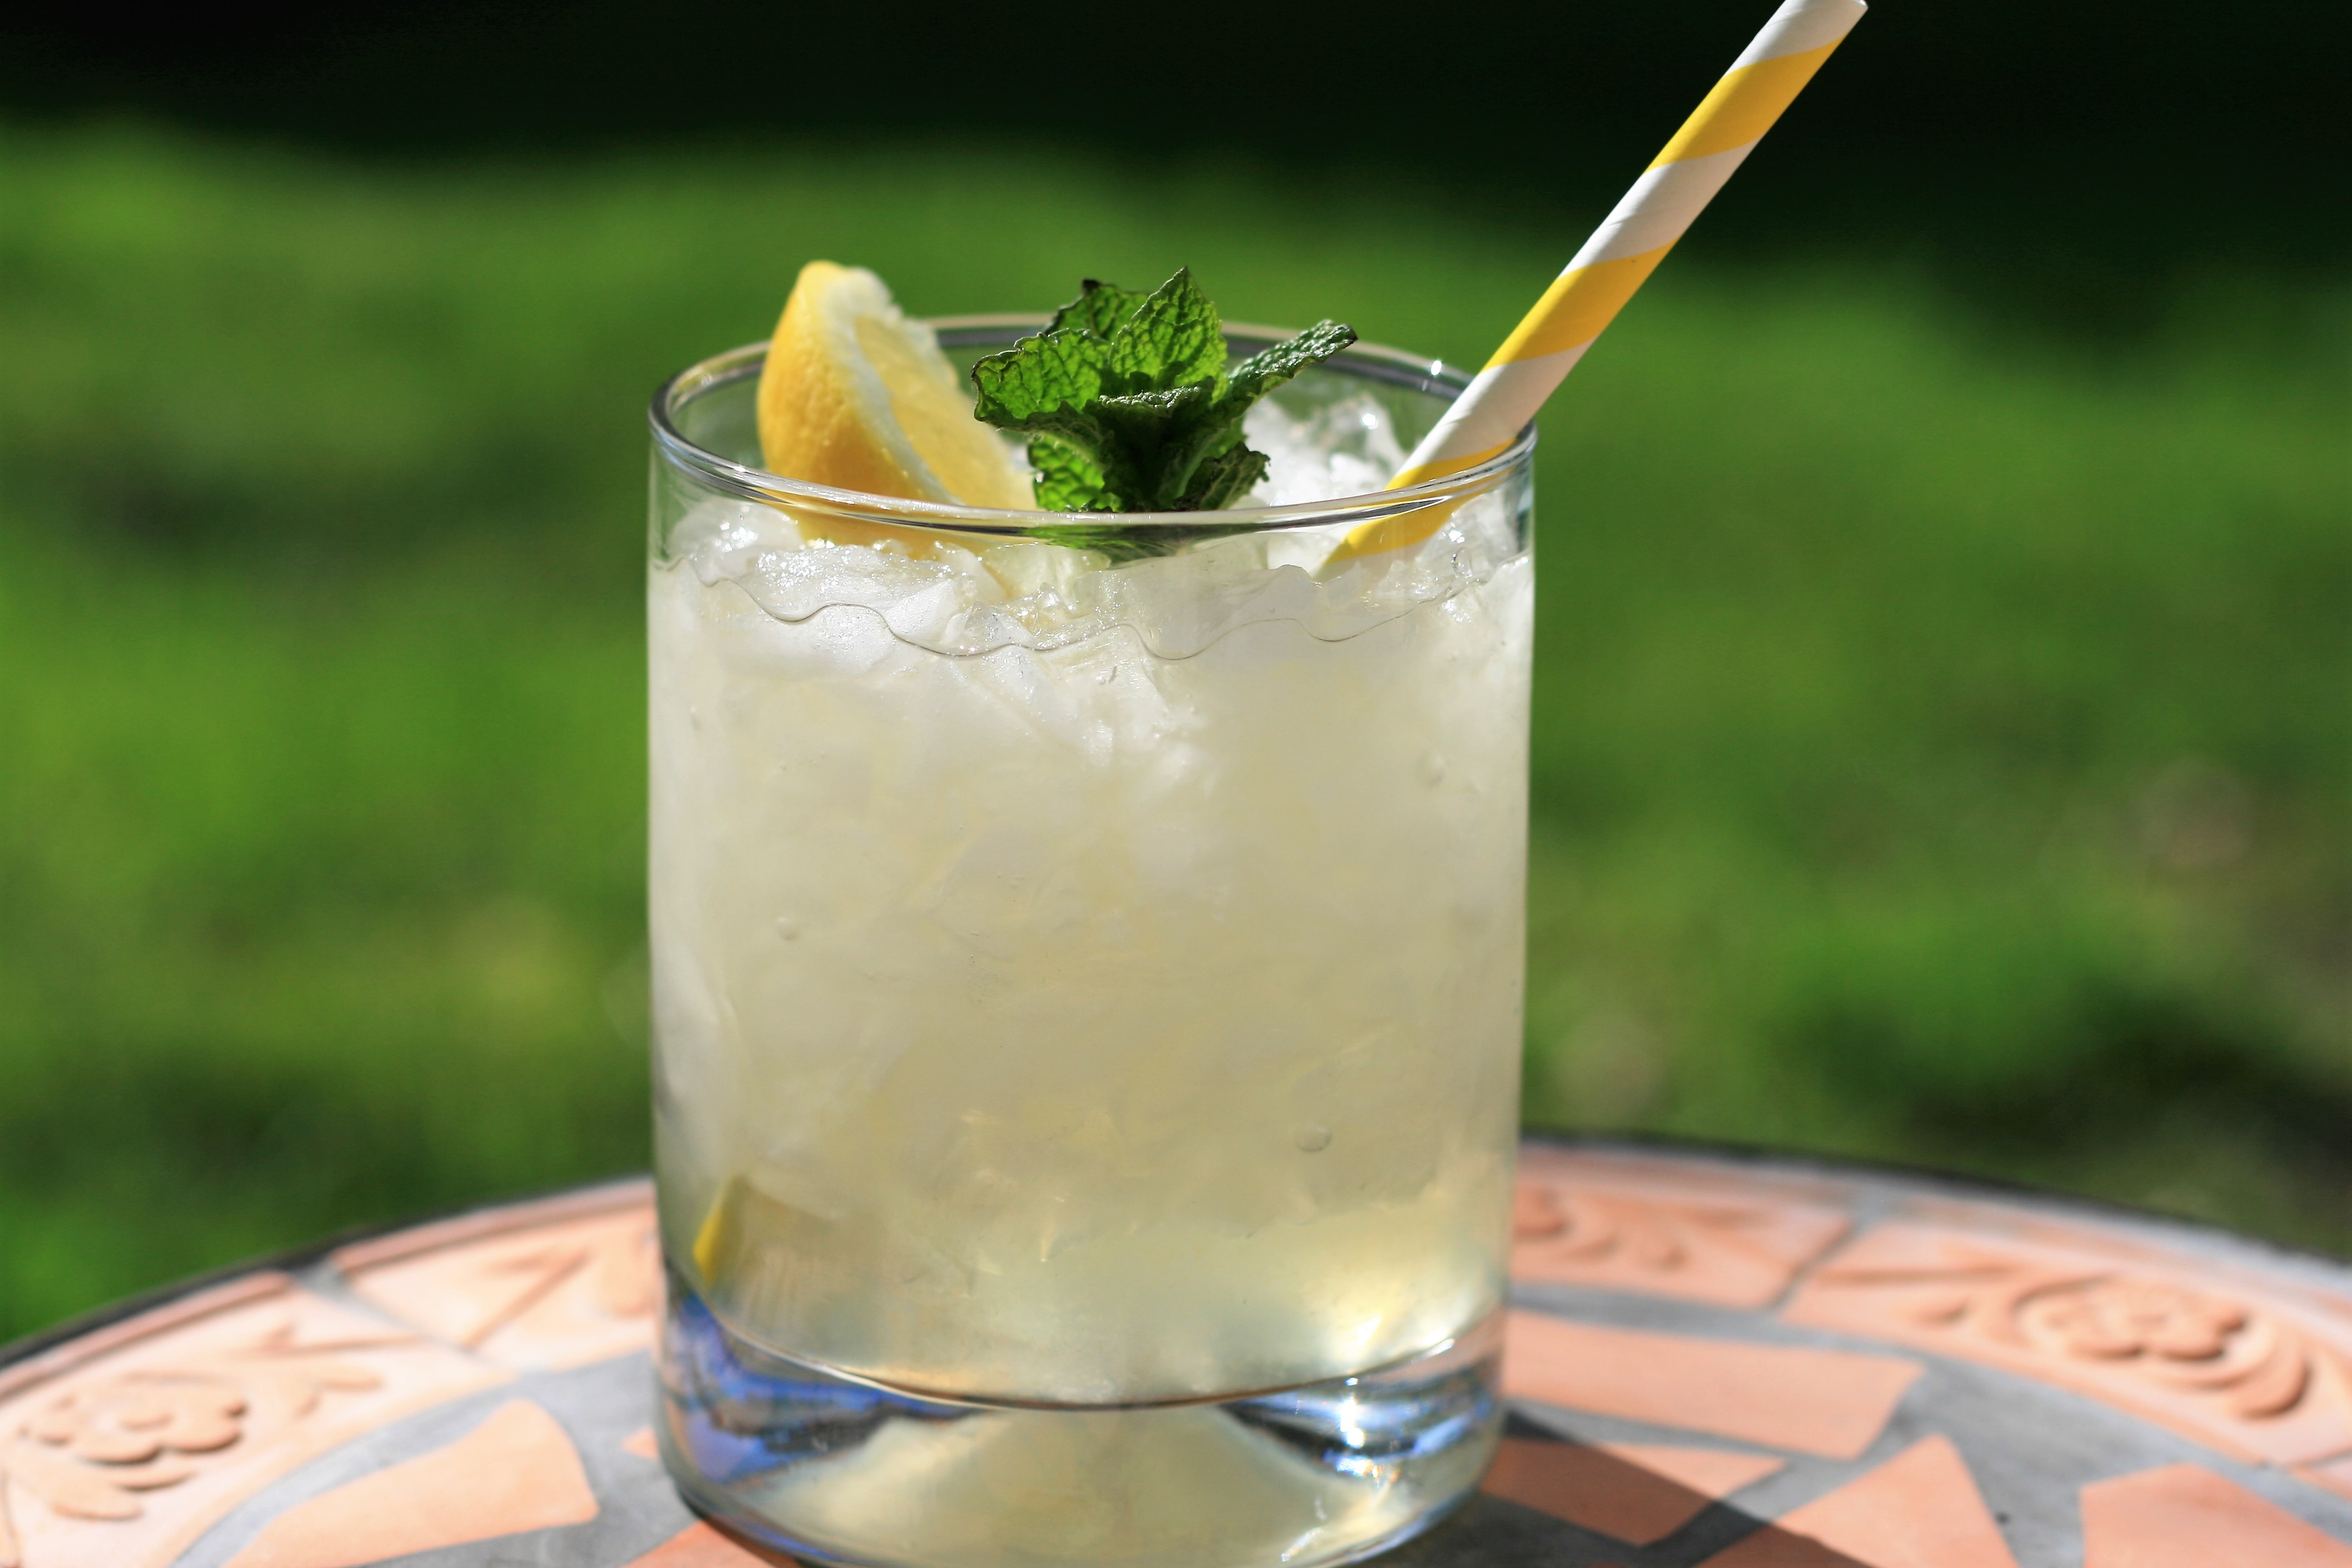 Vodka Lemonade with Mint